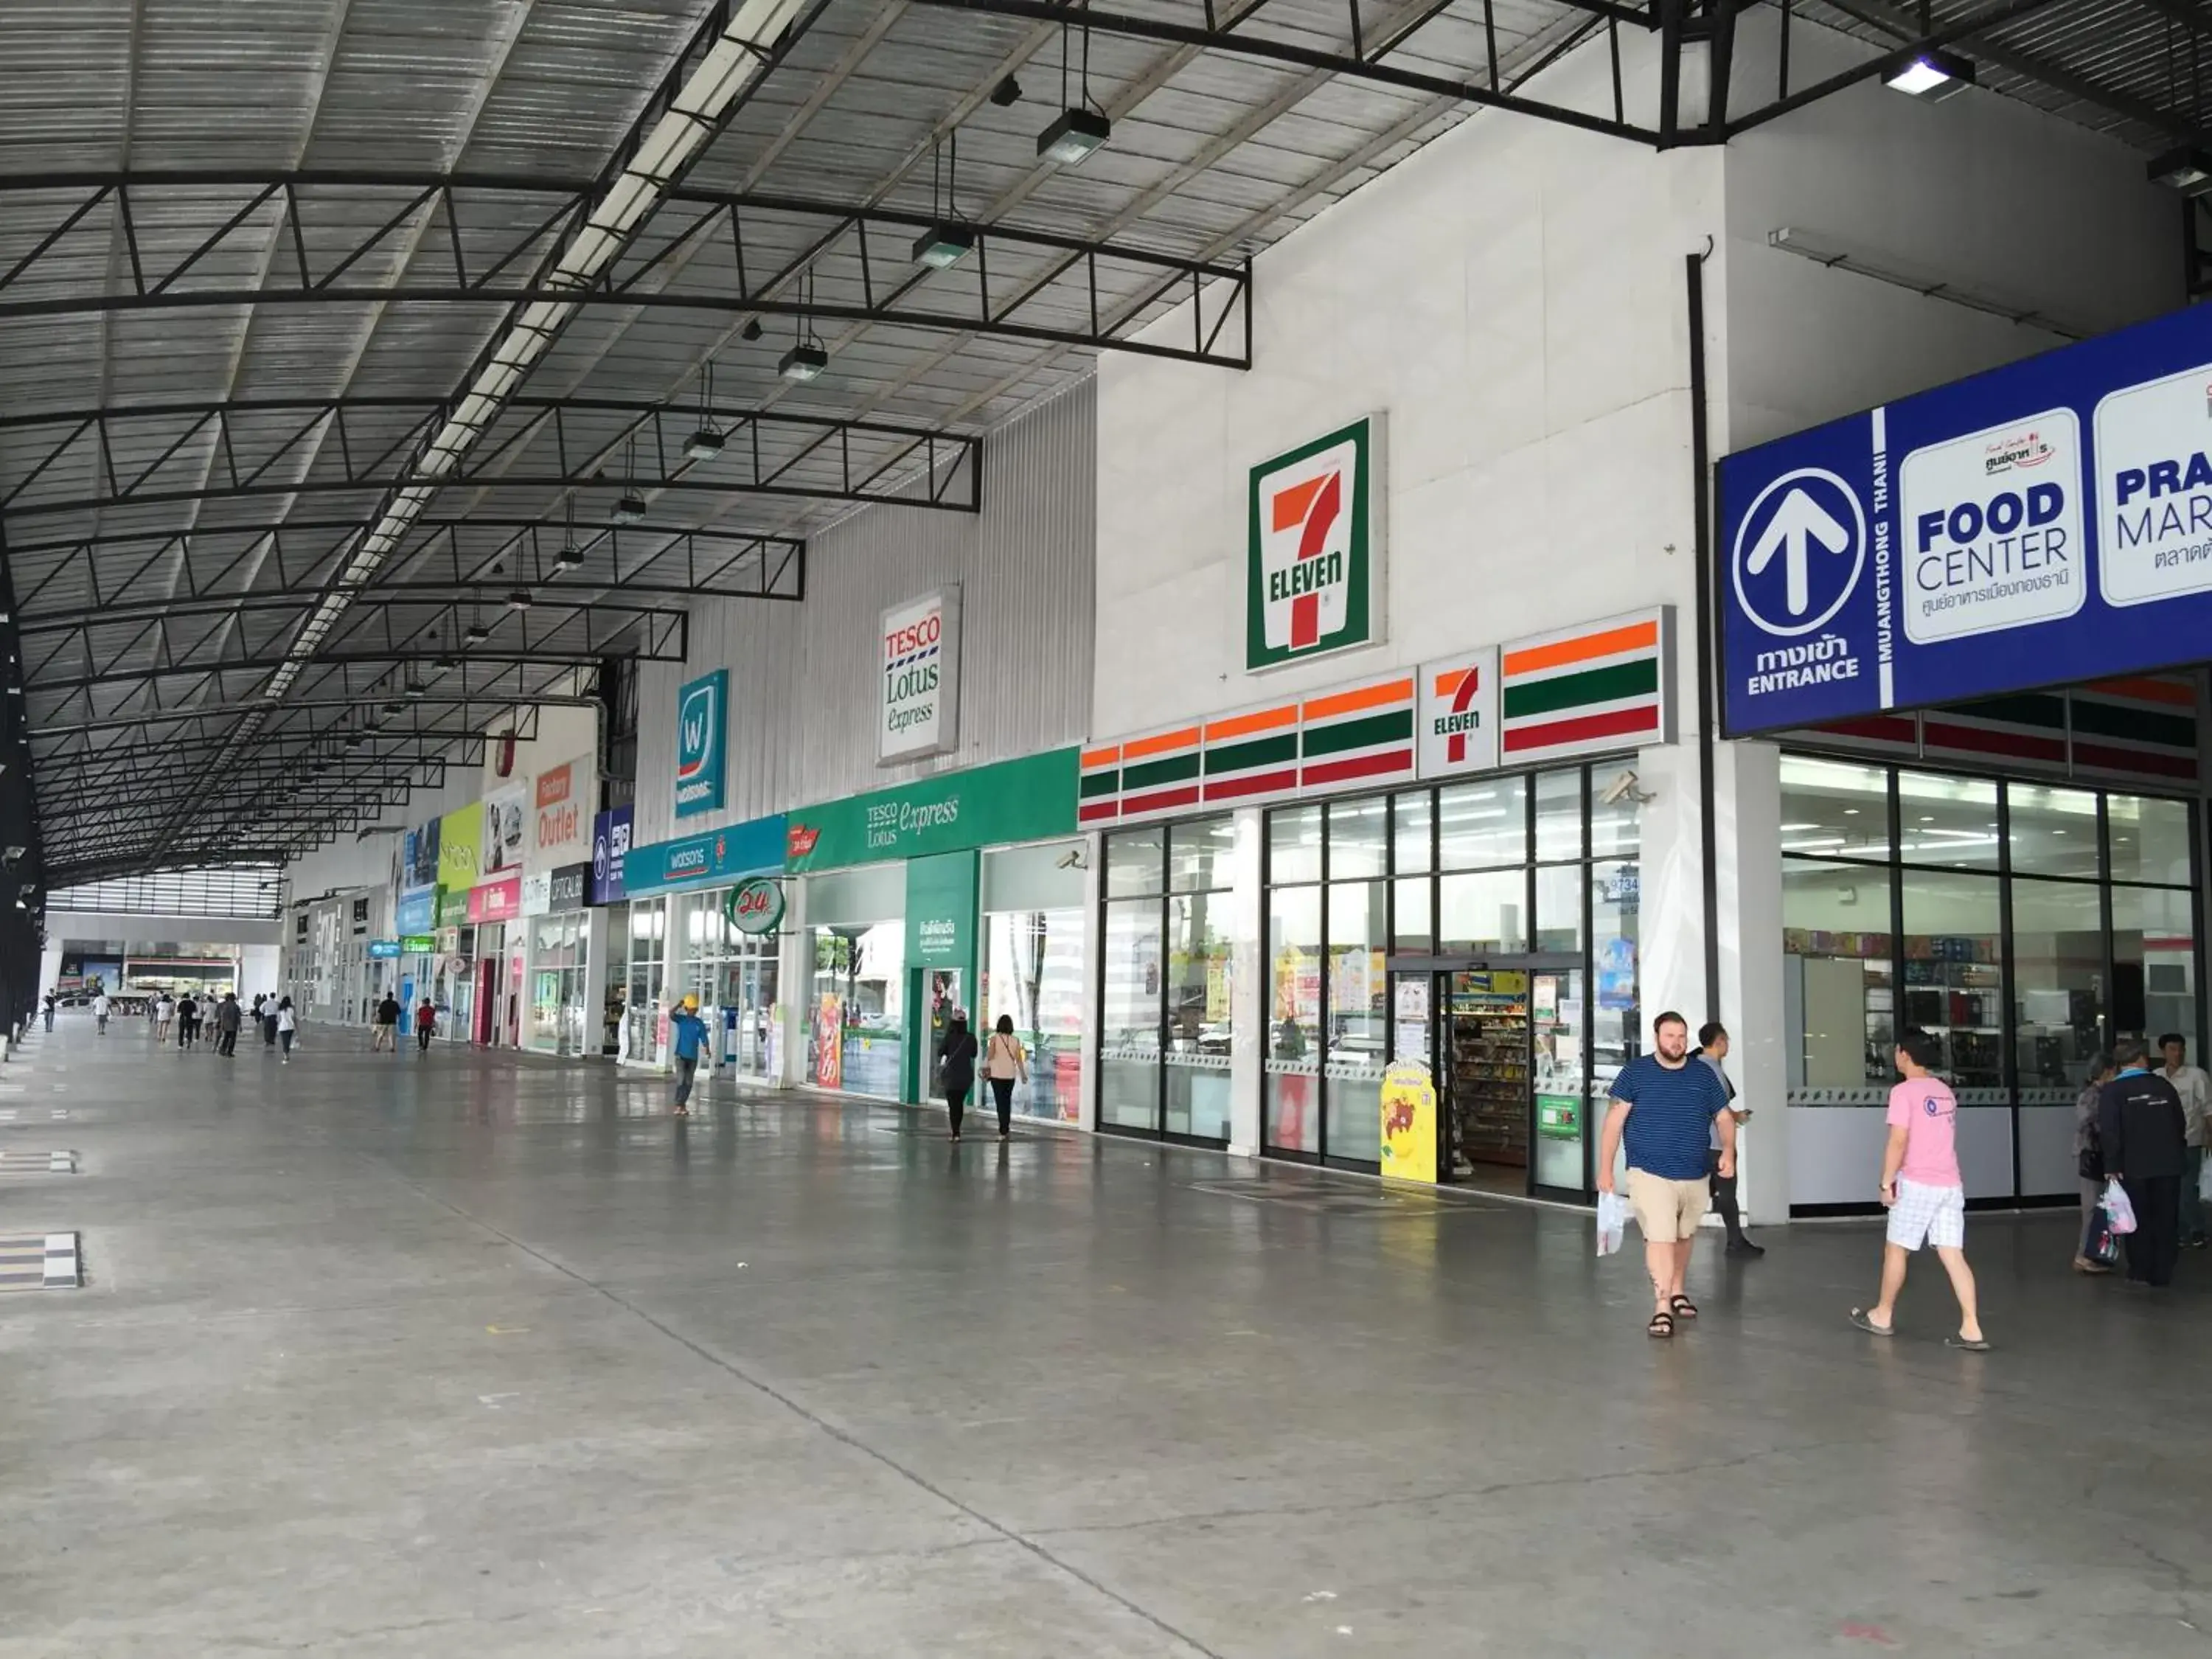 Supermarket/grocery shop, Facade/Entrance in Muangthongthani Rental/Khun Dan